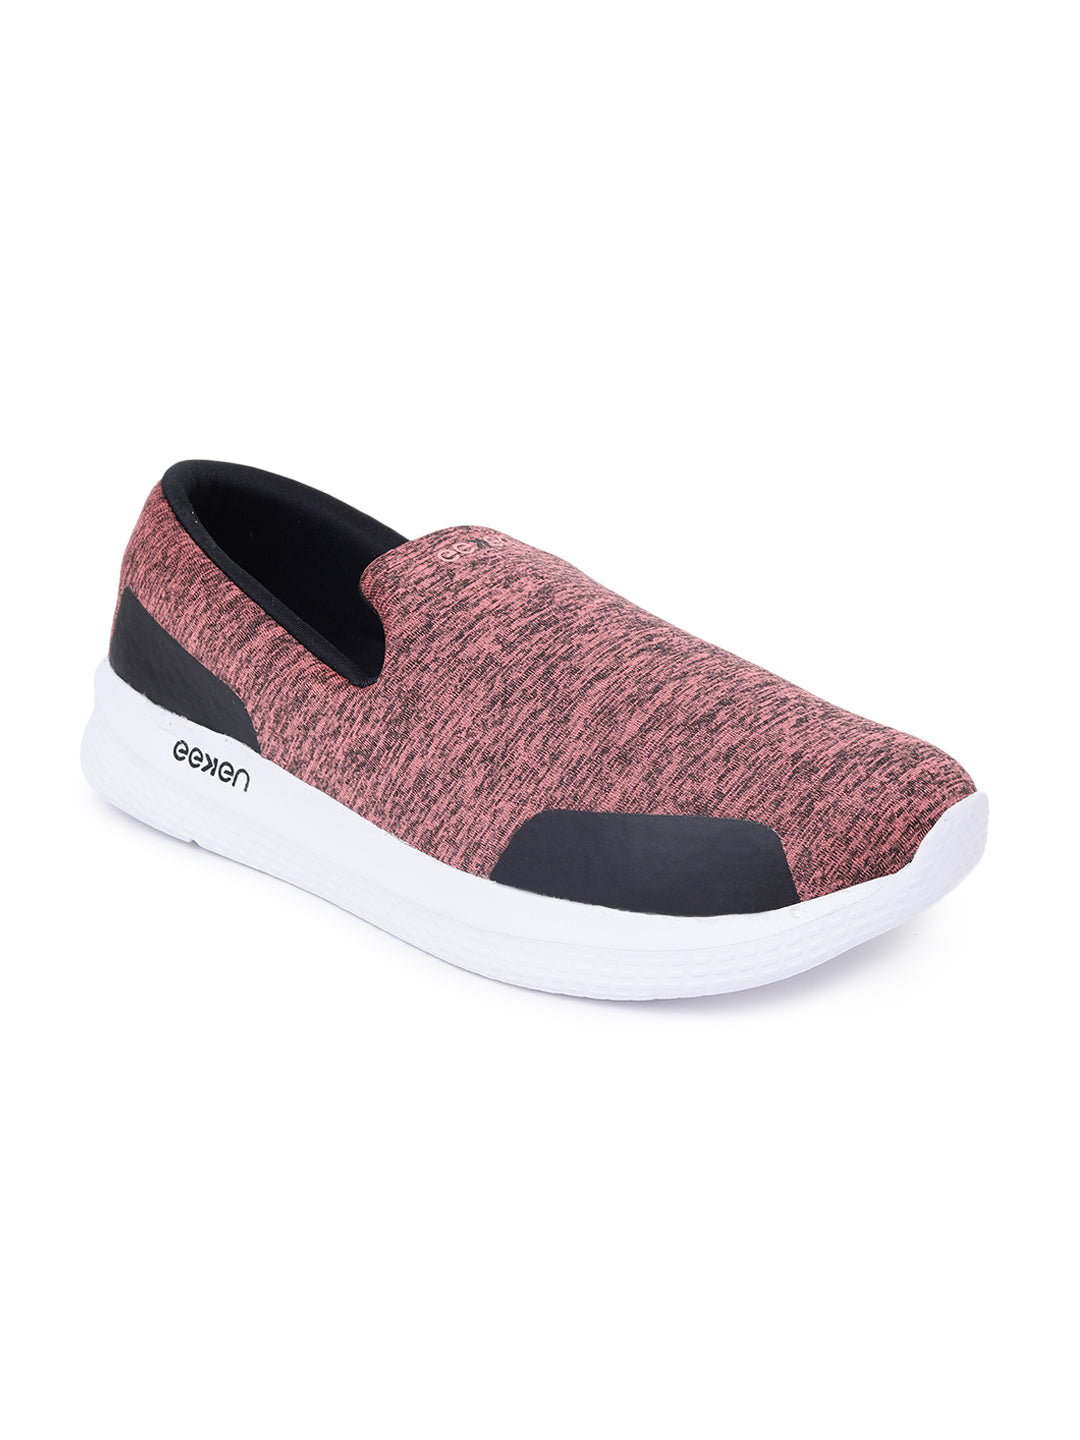 Eeken ESHL32004 Pink Lightweight Casual Slip-On Shoes For Women